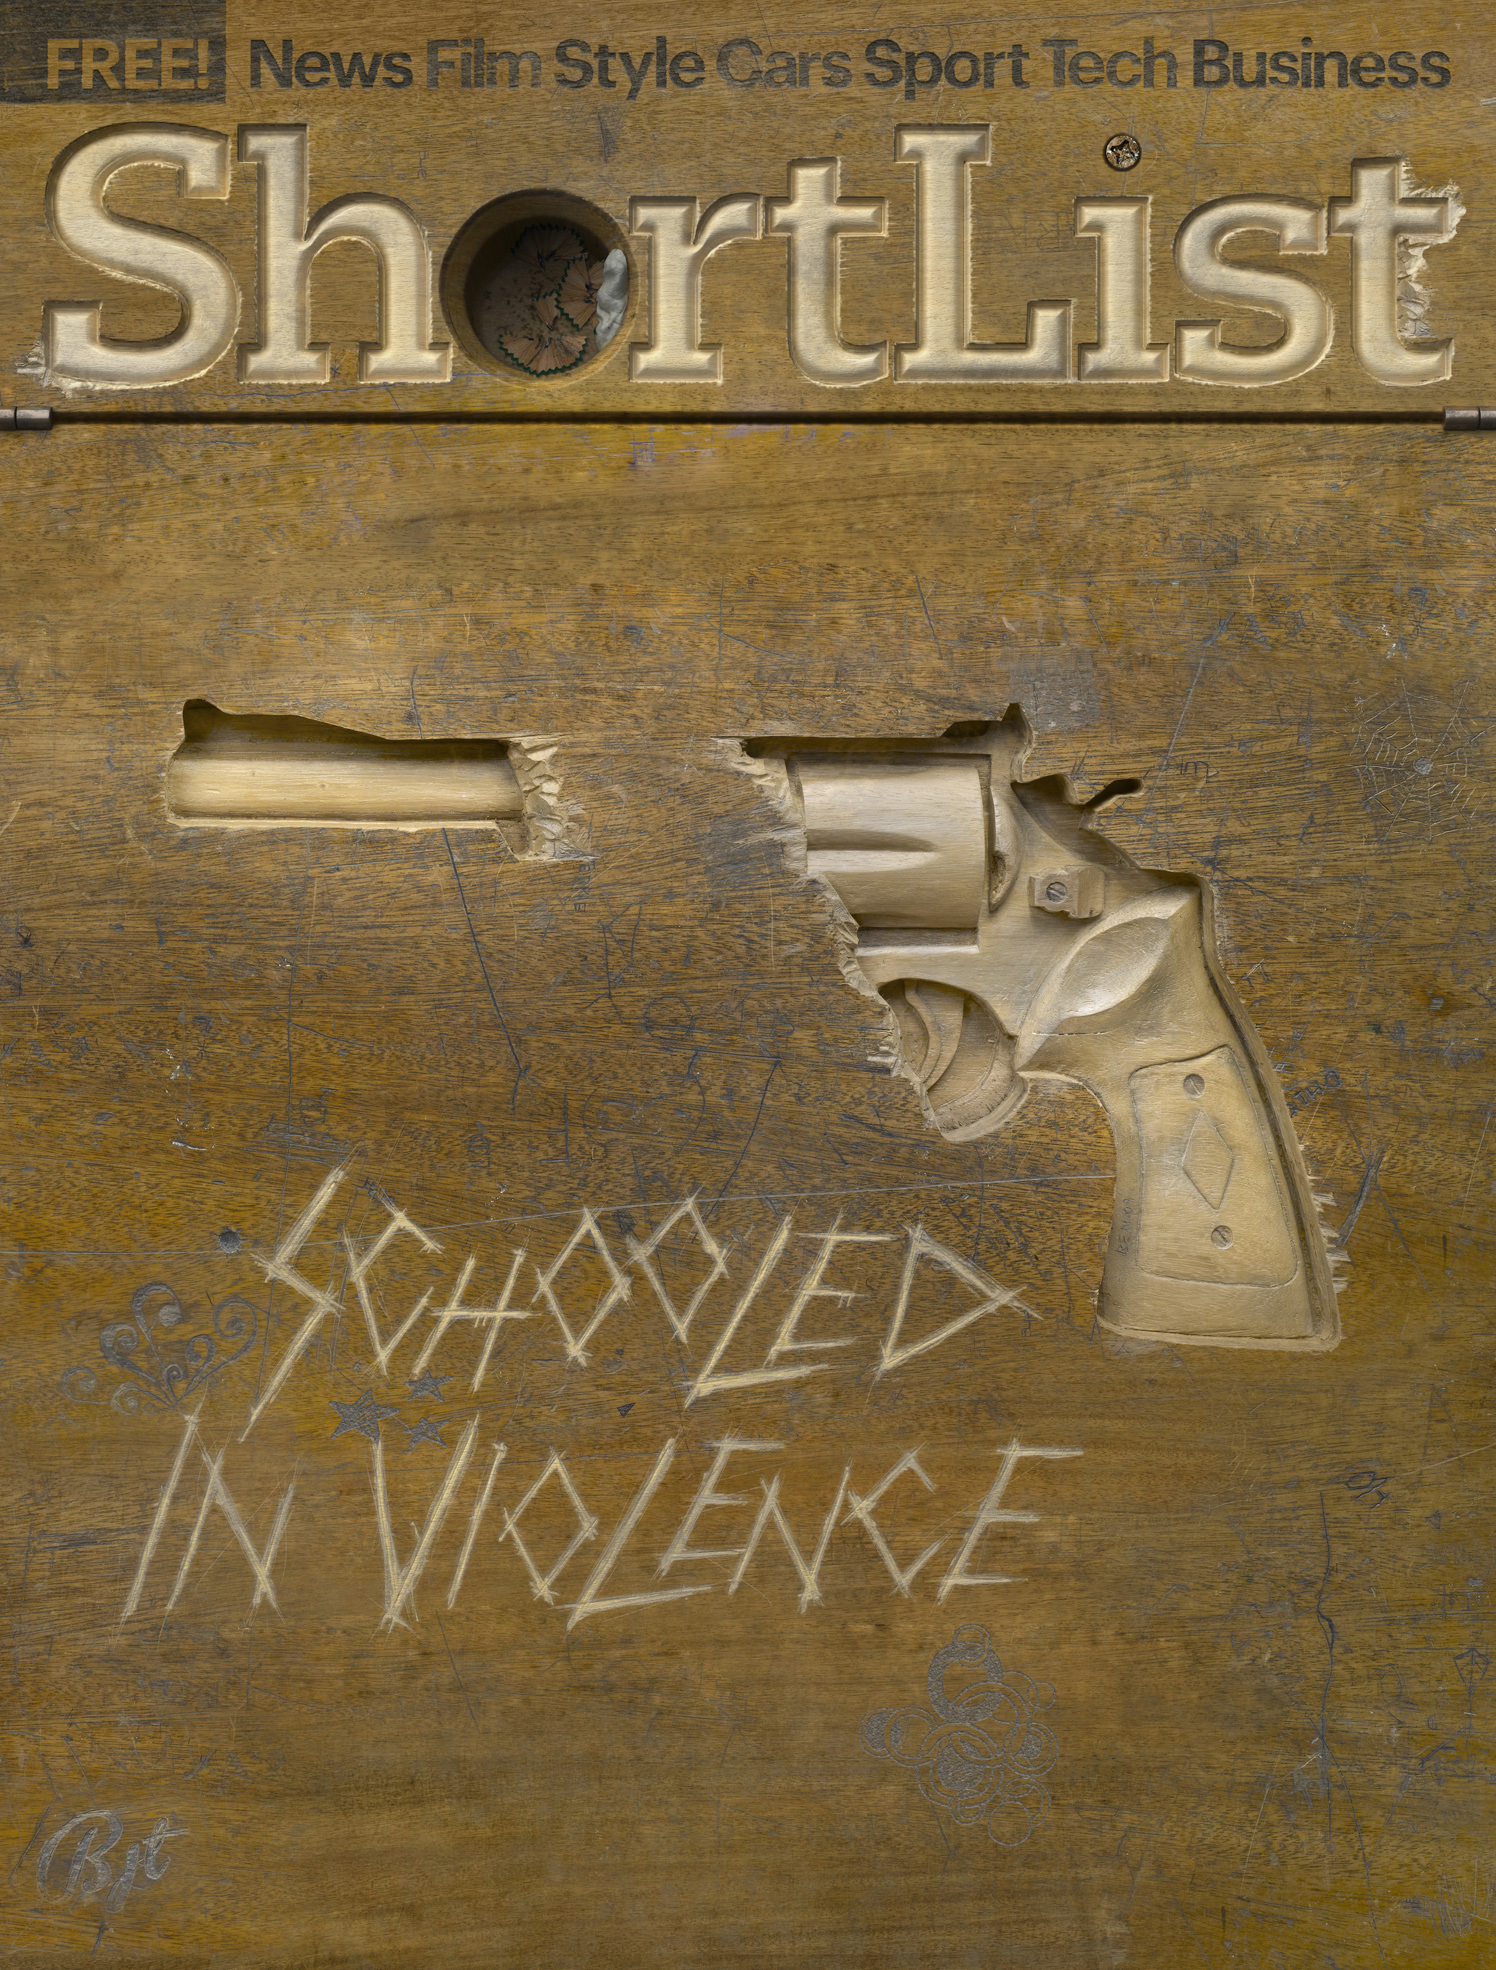 Schooled In Violence / Shortlist Magazine